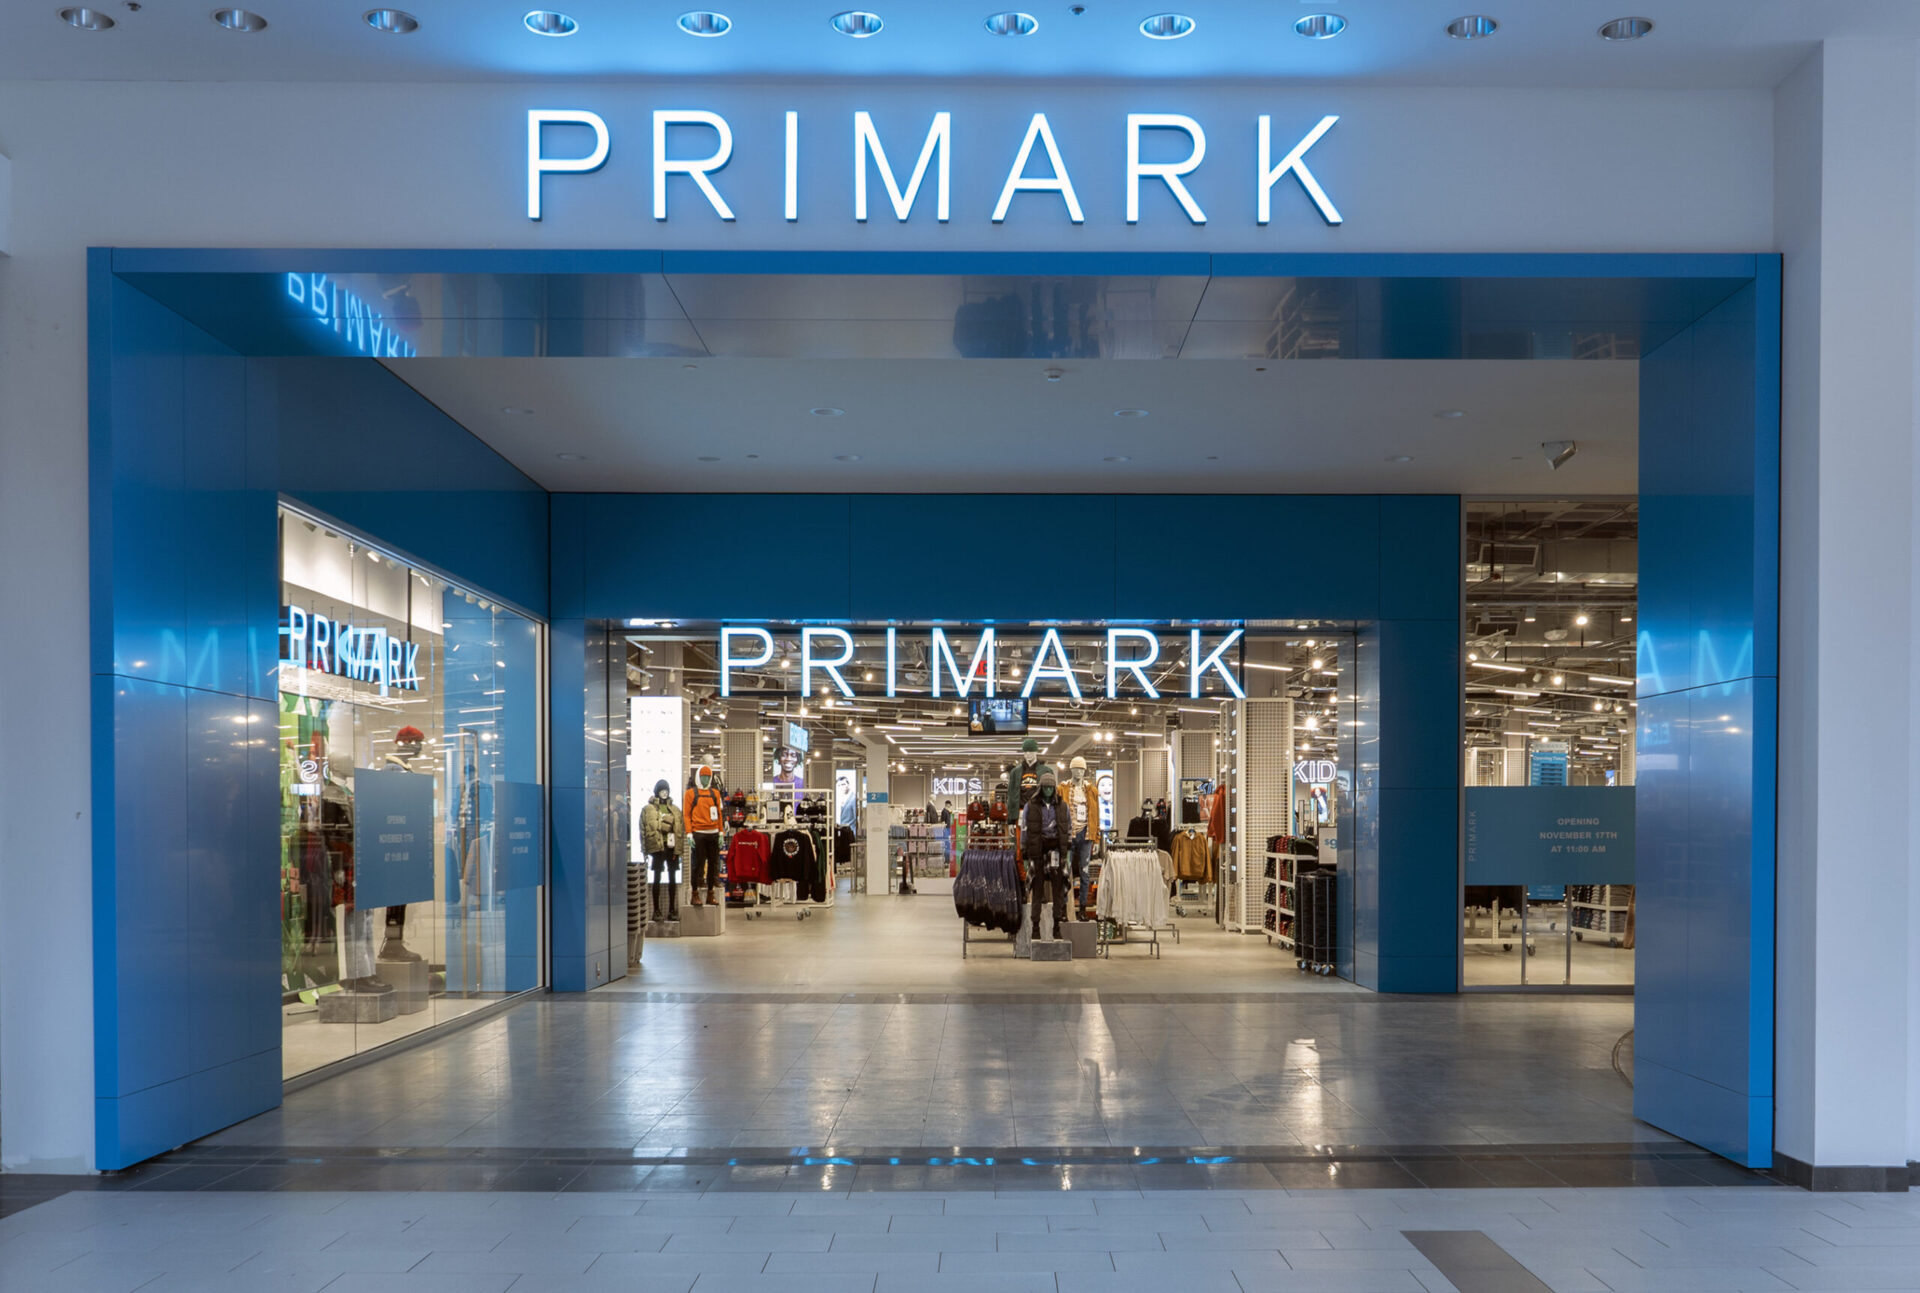 Marketing Strategies and Marketing Mix of Primark